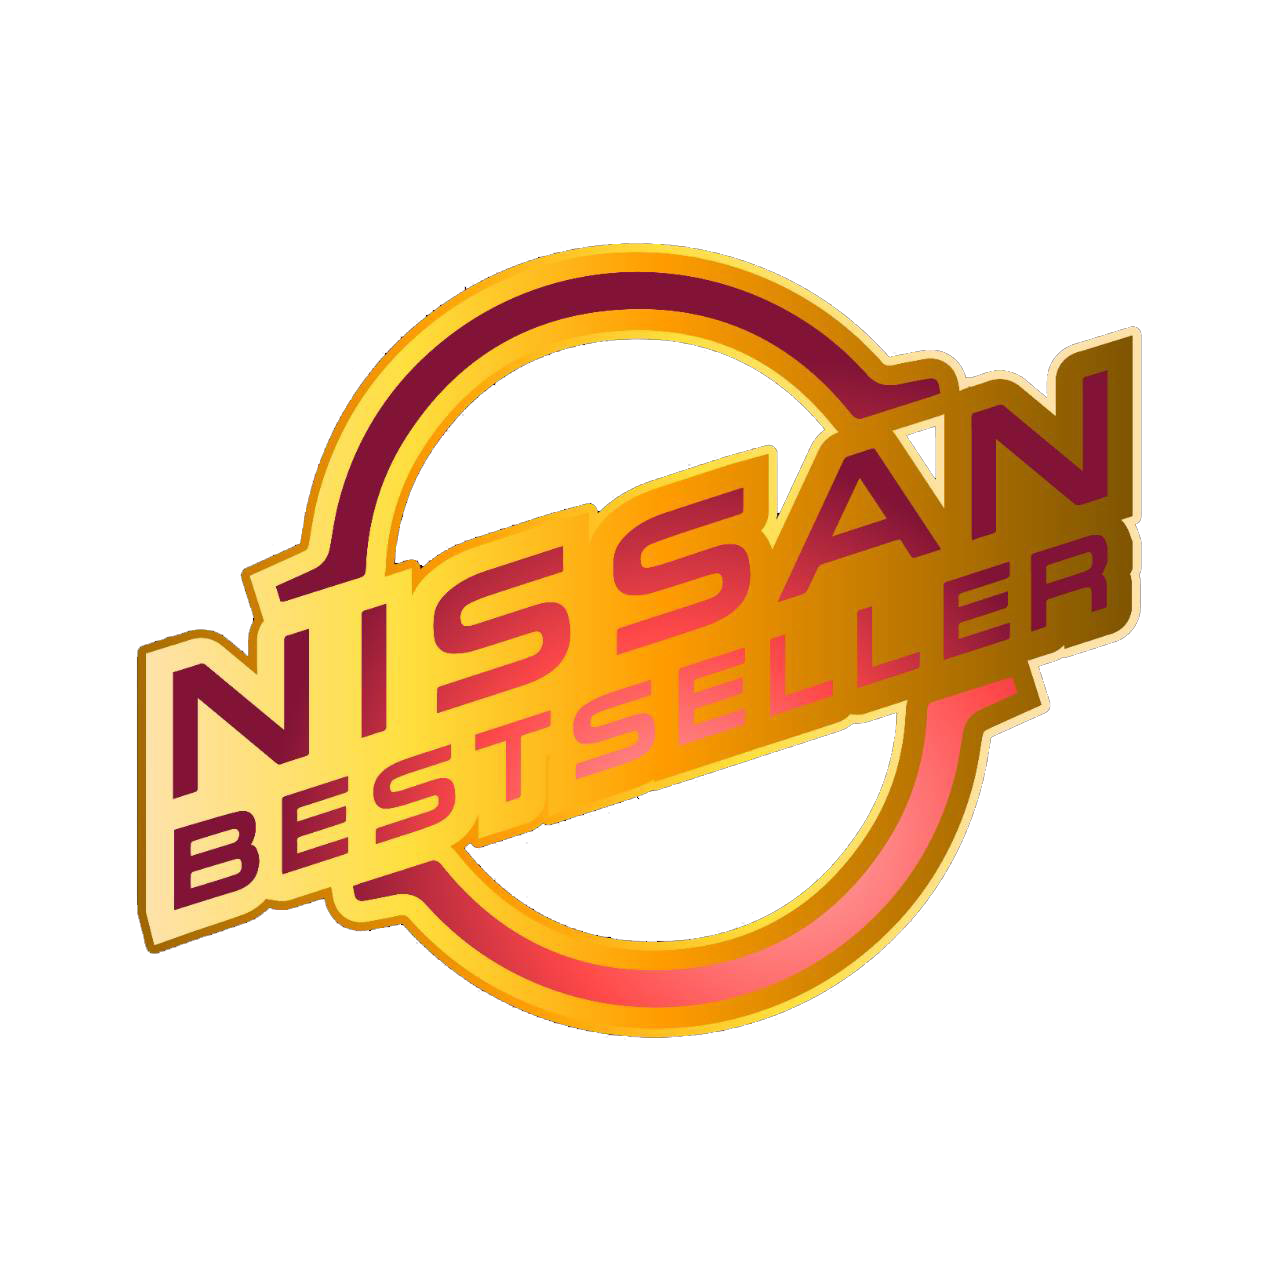 Nissan Bestseller